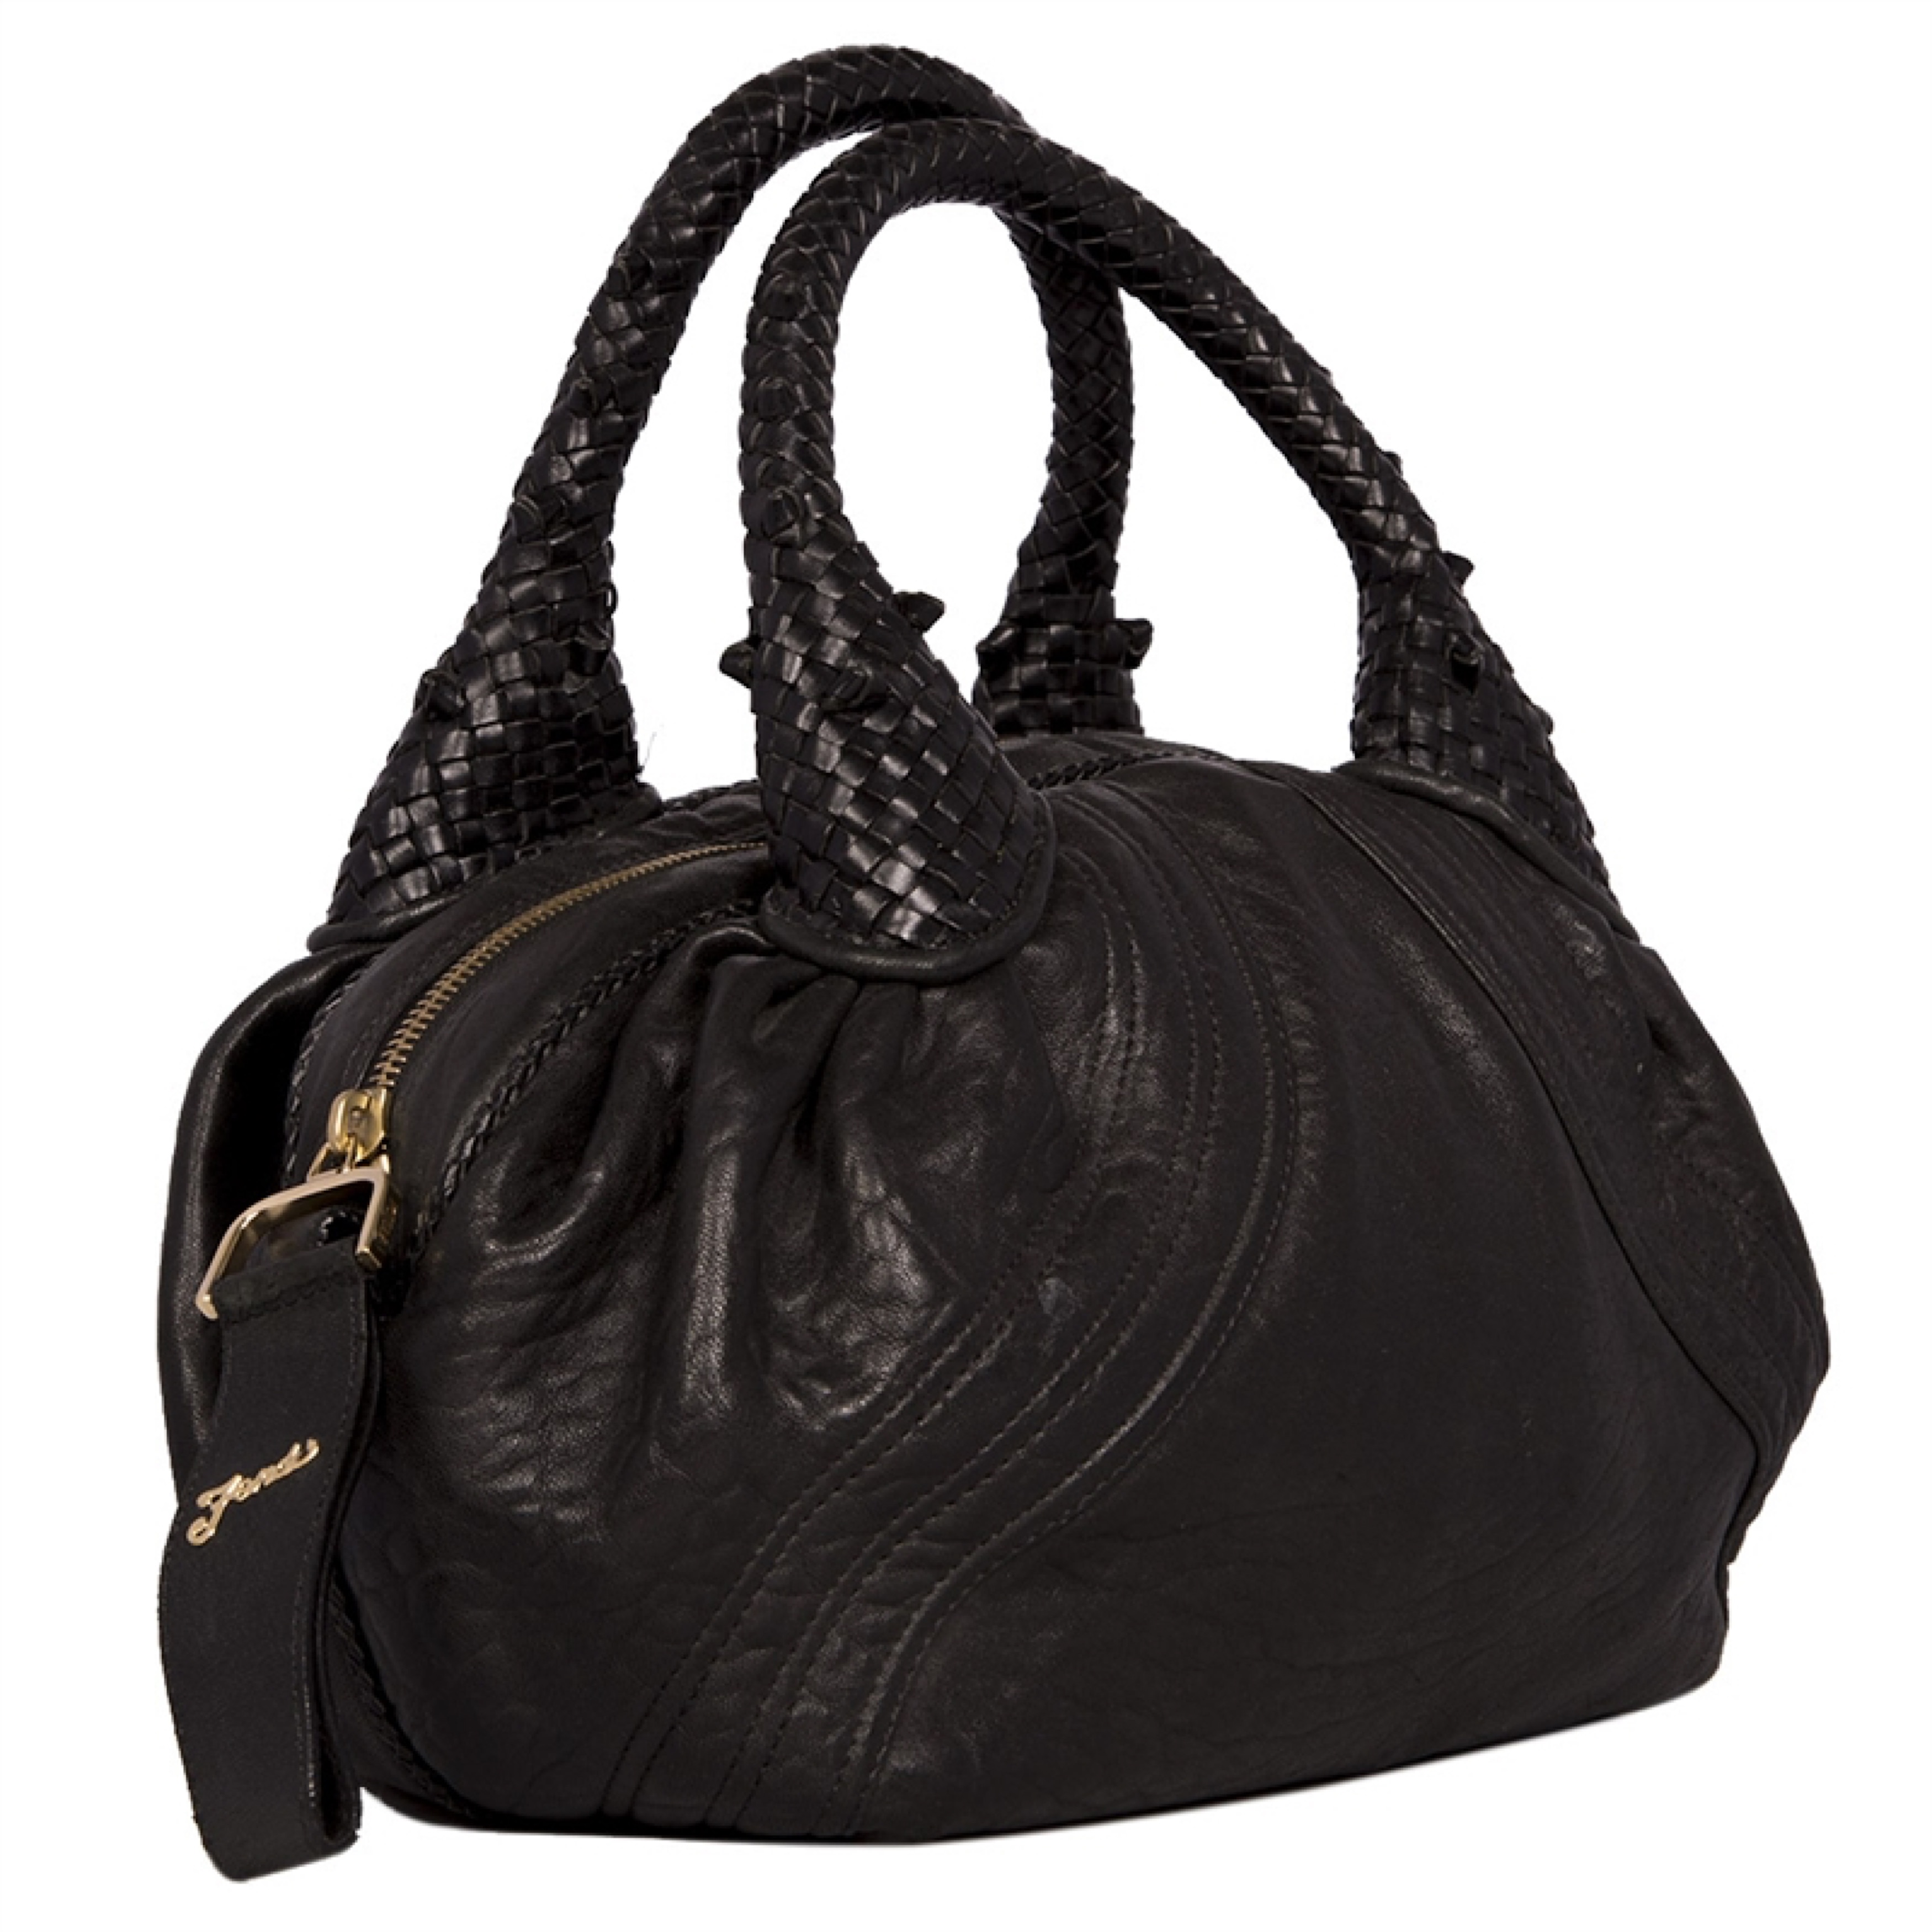 Sold at Auction: Vintage Fendi Zucca Spy Handbag